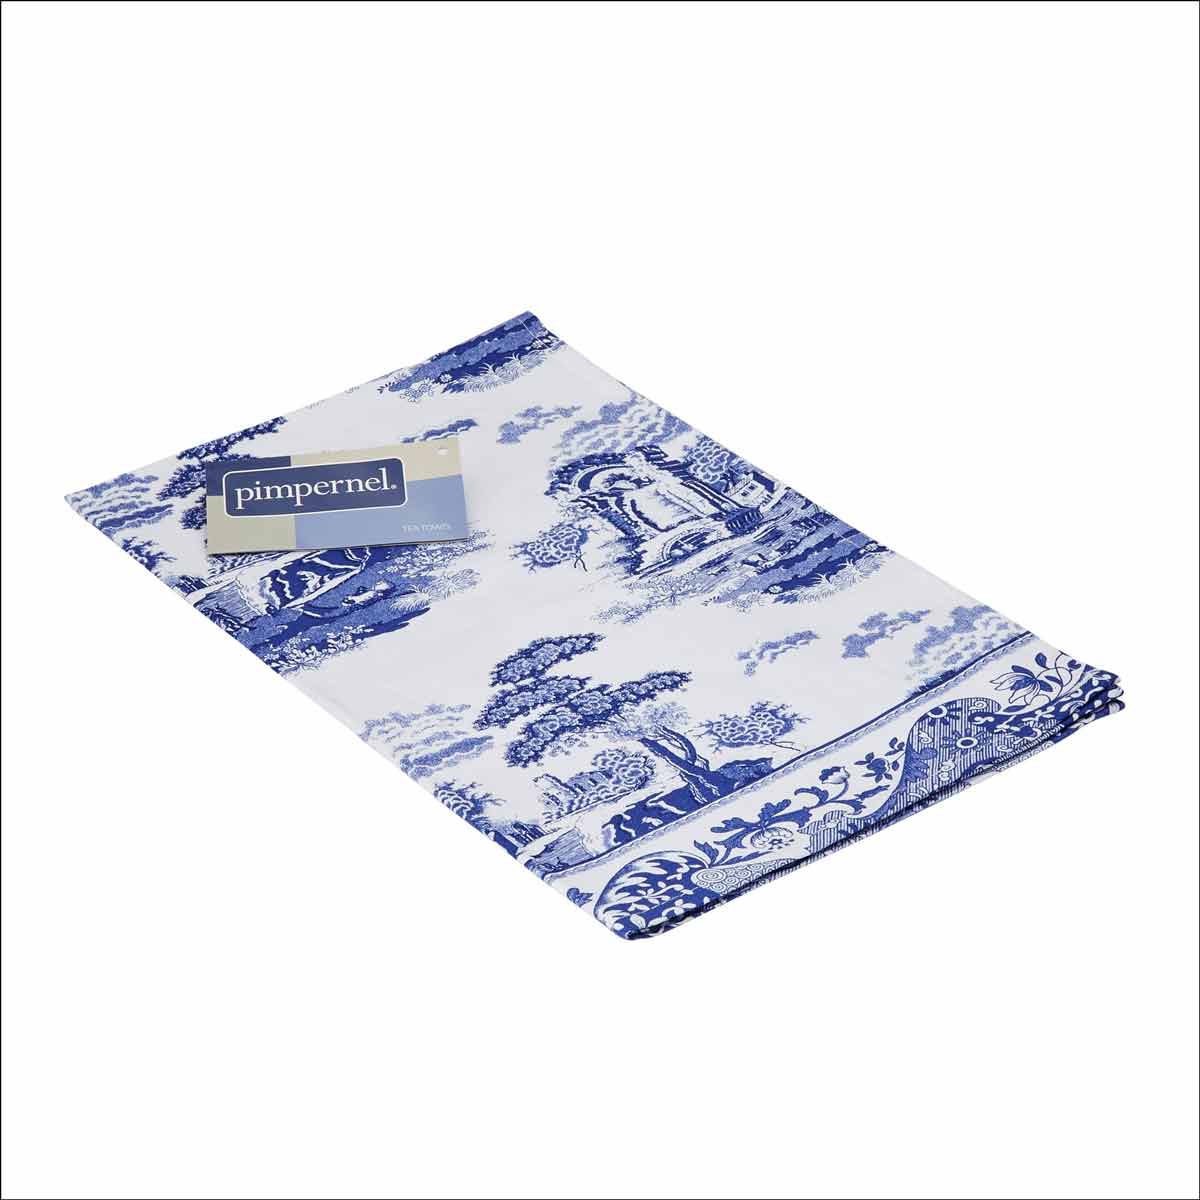 Pimpernel Blue Italian Tea Towel